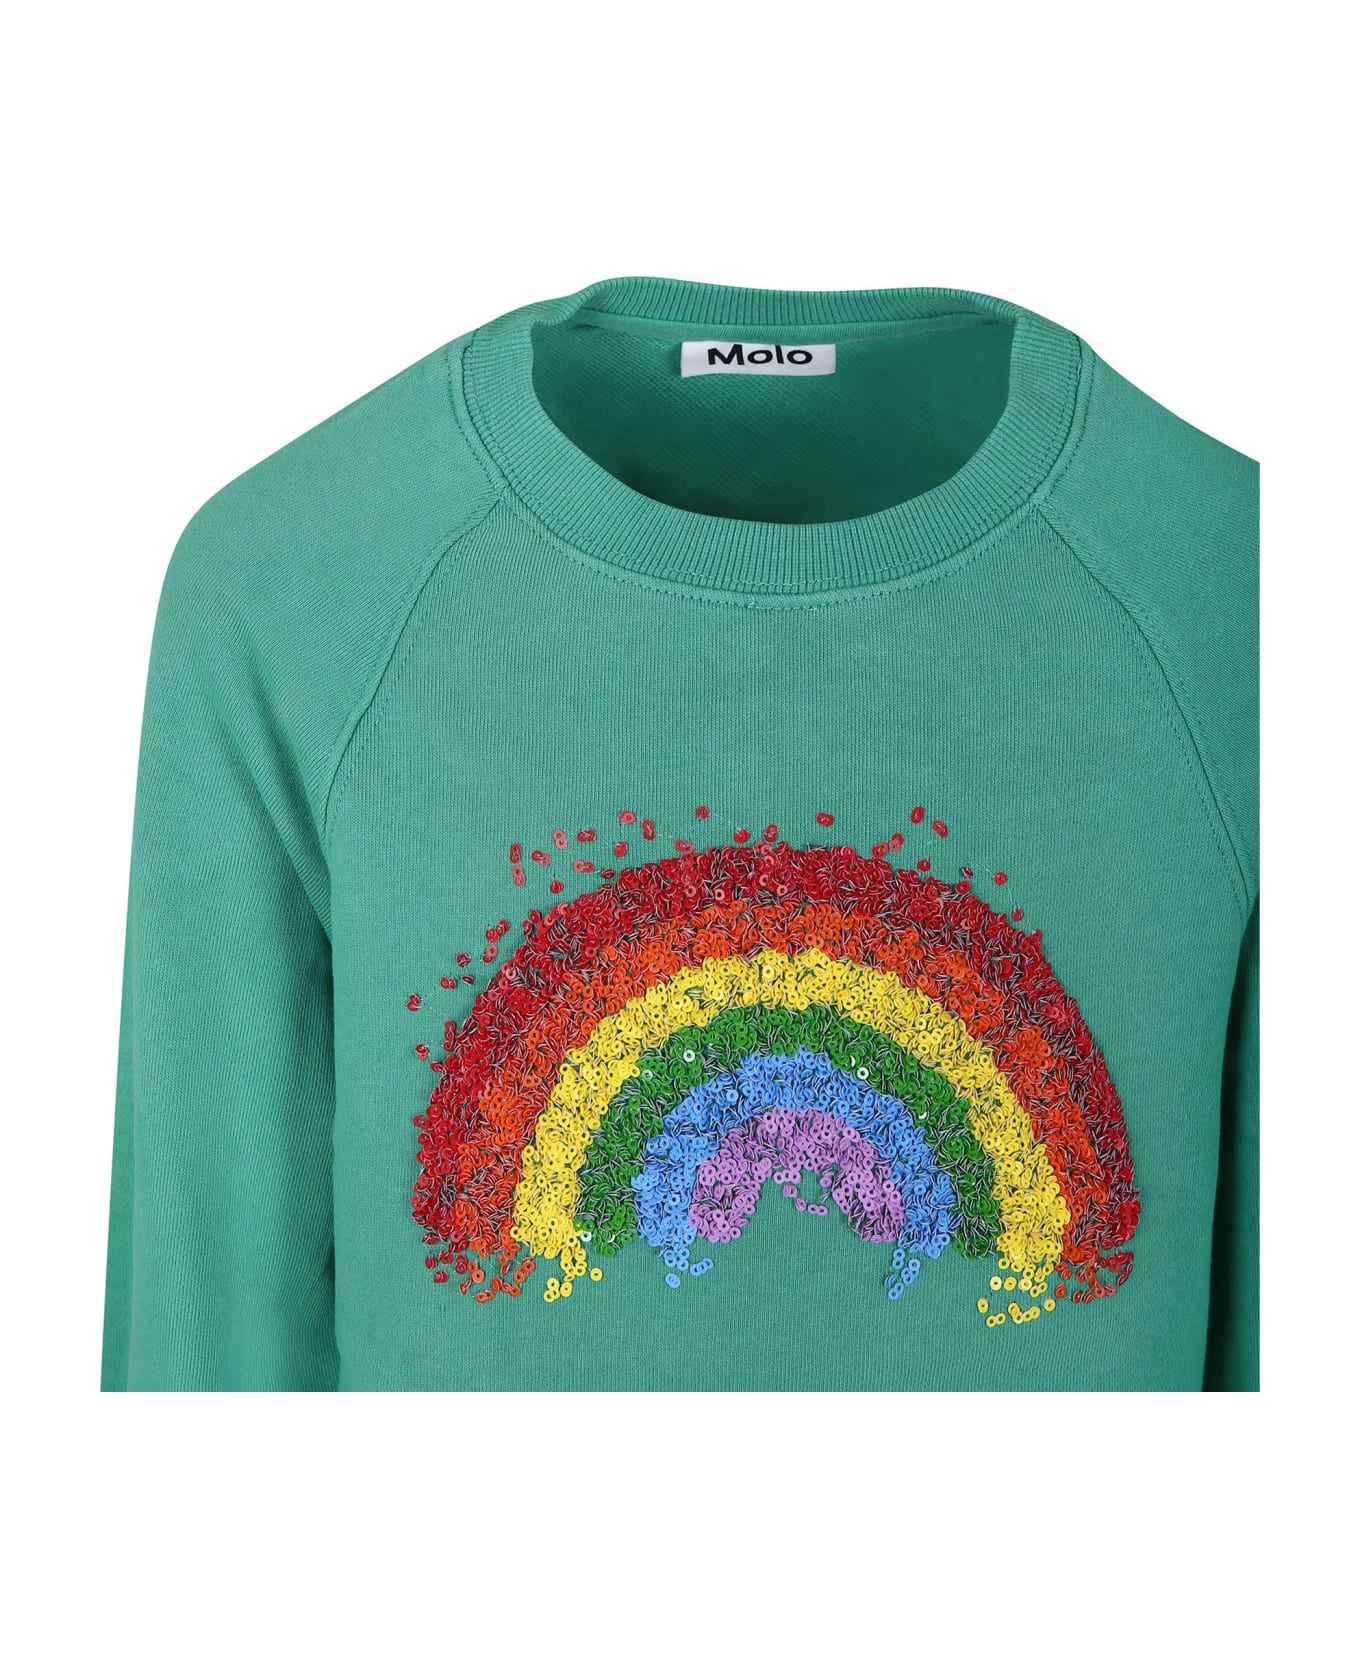 Molo Green Sweatshirt For Girl With Rainbow - Green ニットウェア＆スウェットシャツ